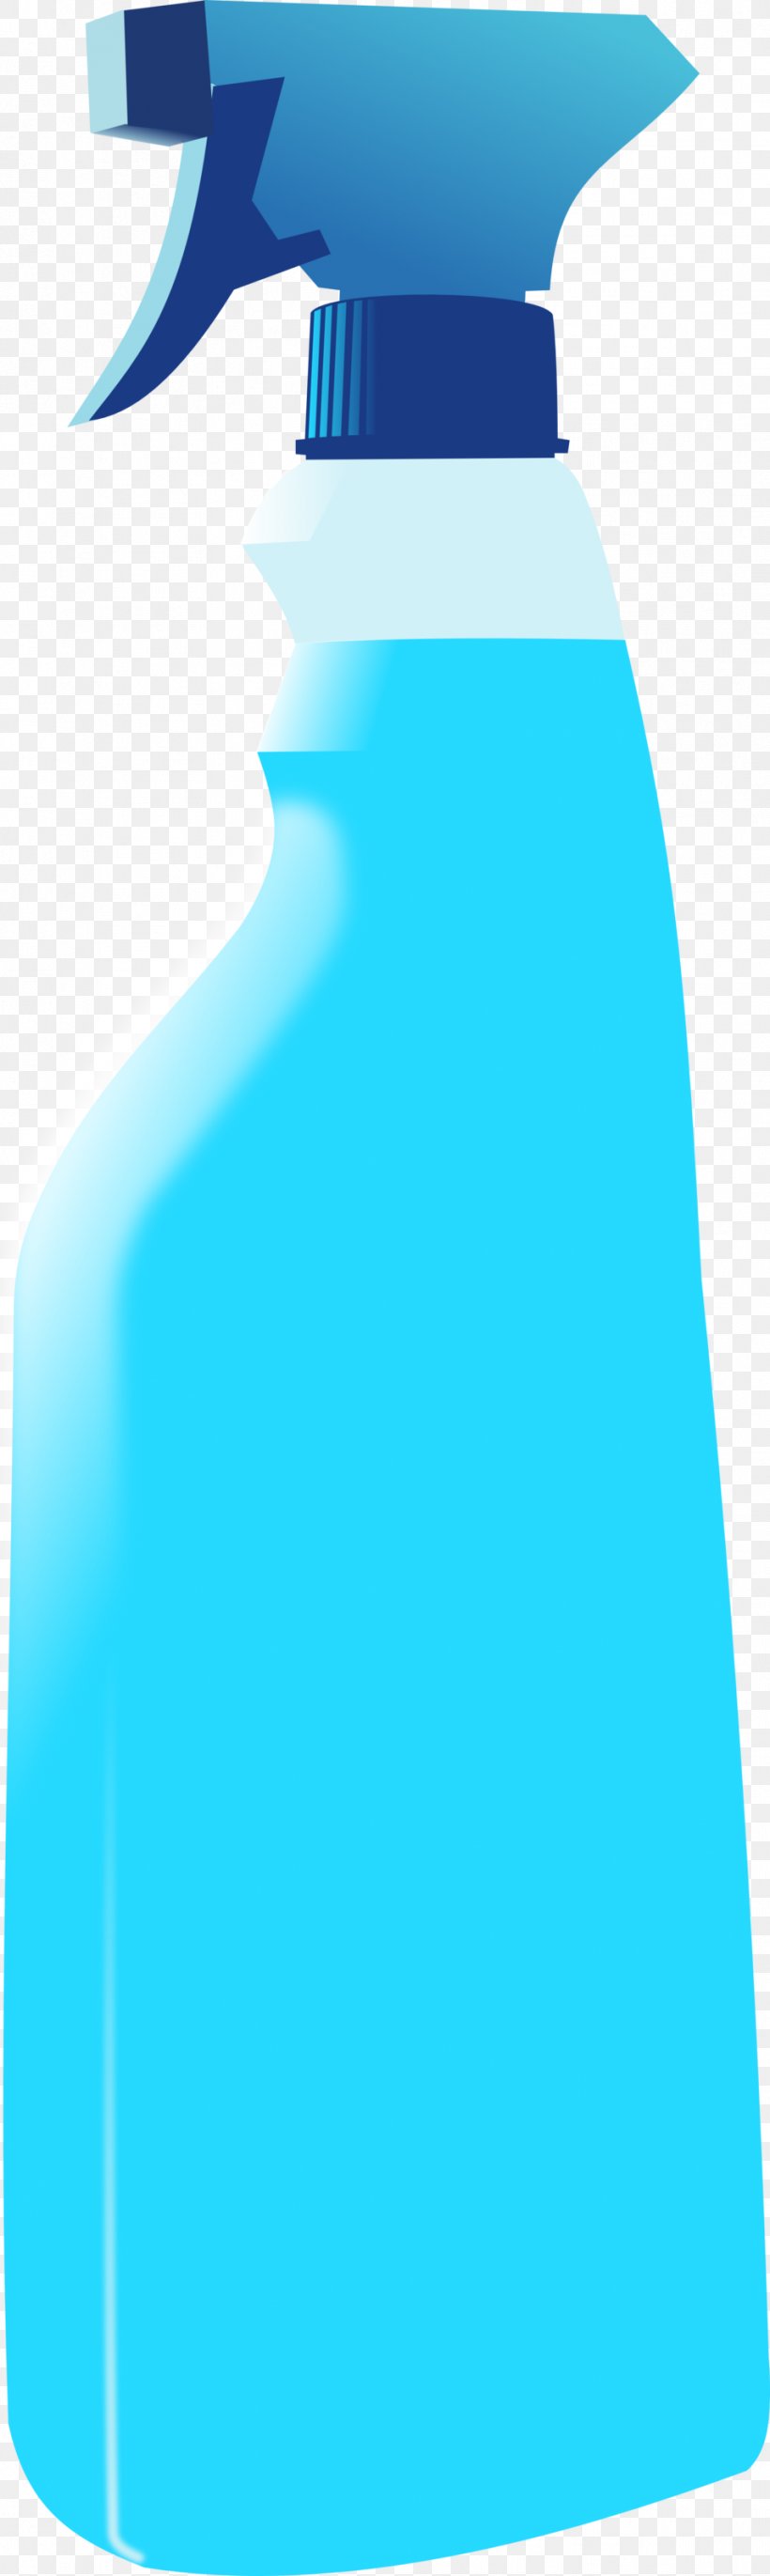 Spray Bottle Plastic Bottle Aerosol Spray, PNG, 958x3204px, Spray Bottle, Aerosol Spray, Aqua, Azure, Blue Download Free